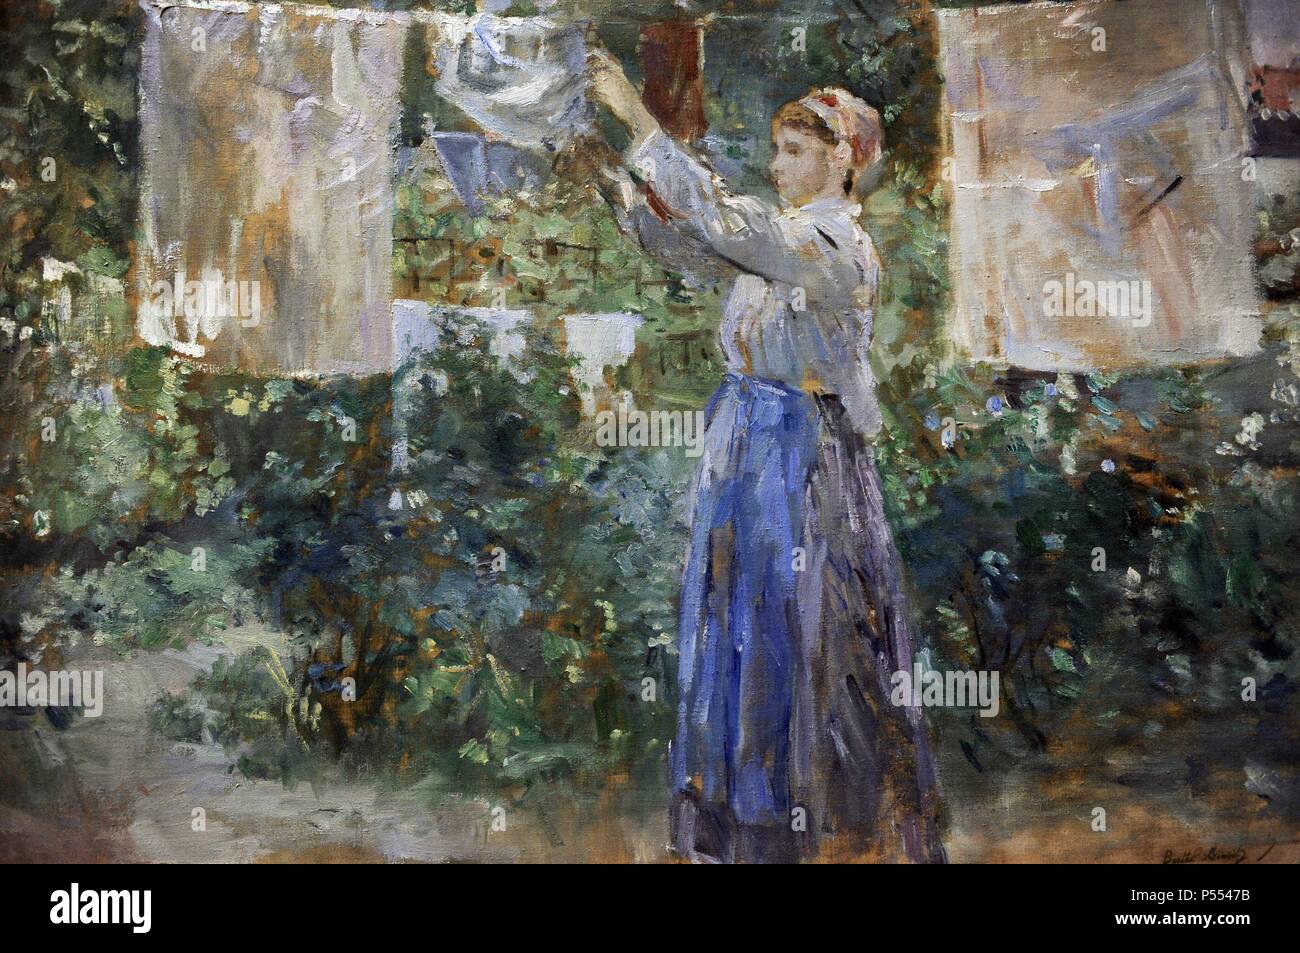 Berthe Morisot (1841-1895). Pittore Francese. Impressionismo. Contadina di capi appesi per asciugare (1881). Ny Carlsberg Glyptotek. Copenhgen. La Danimarca. Foto Stock